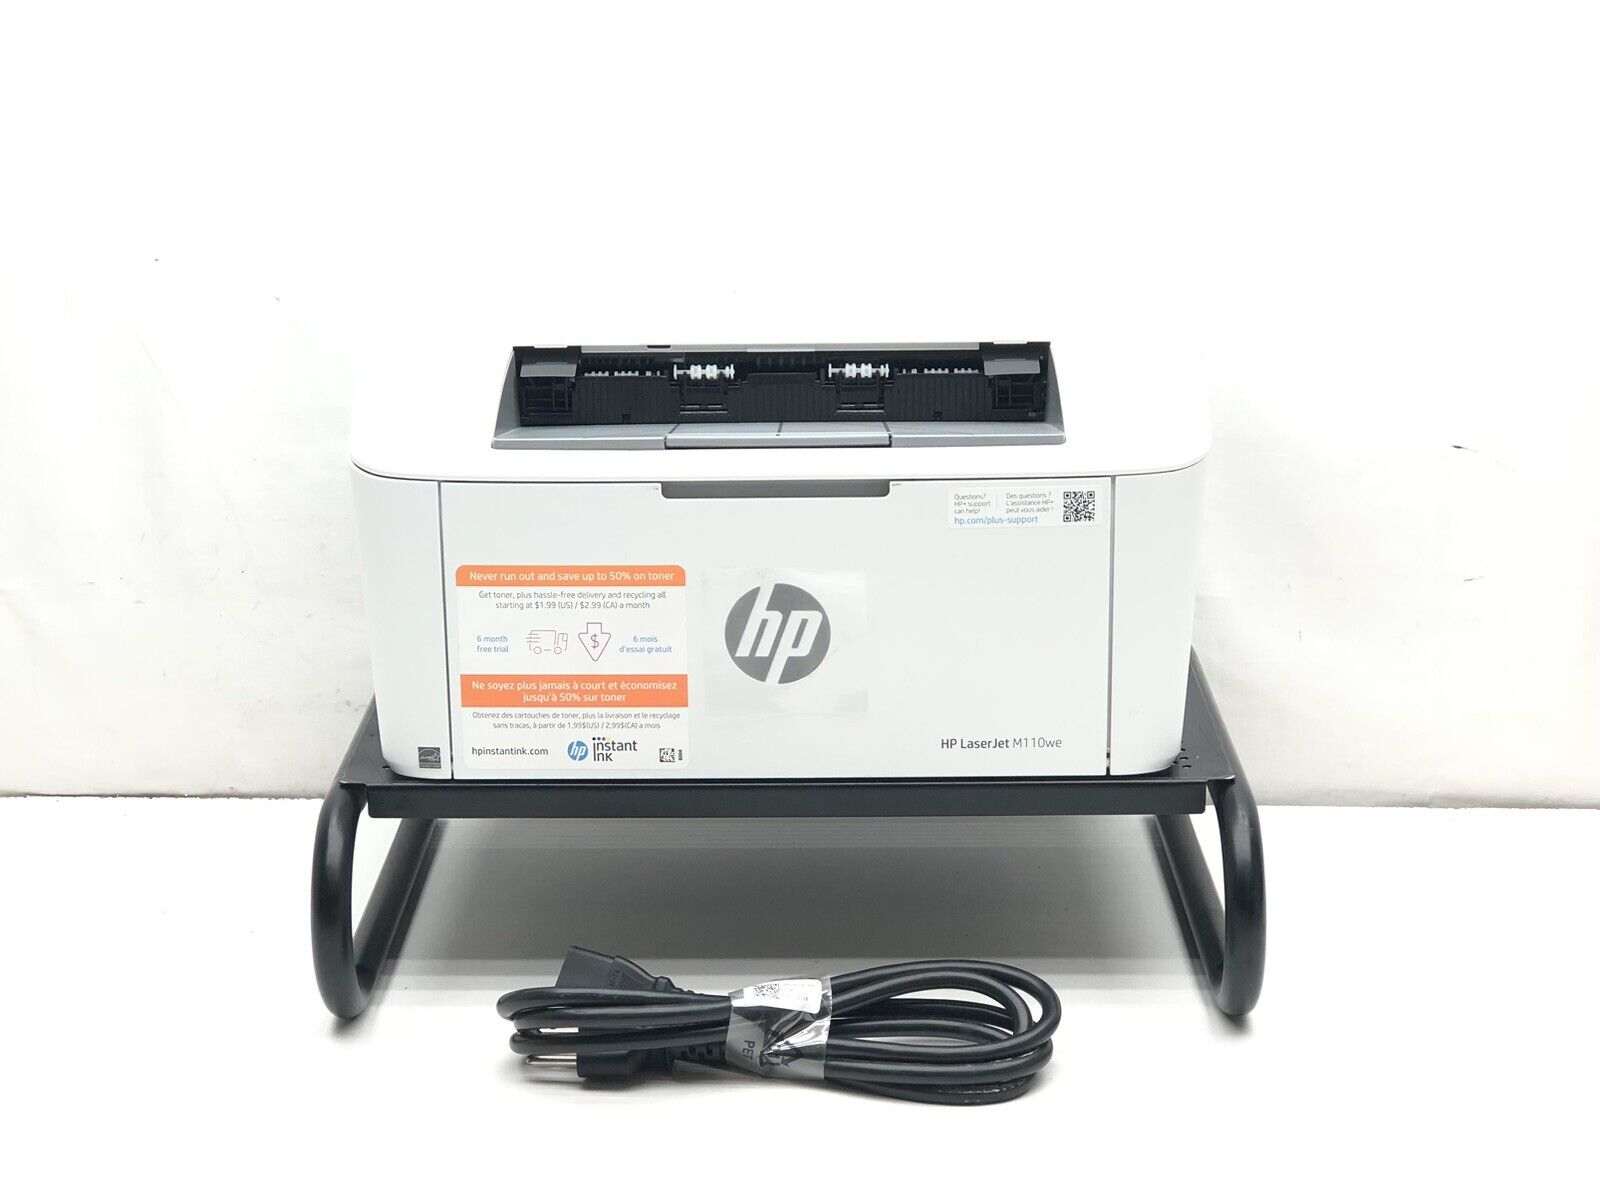 HP LaserJet M110we Monochrome USB Laser Printer With Toner